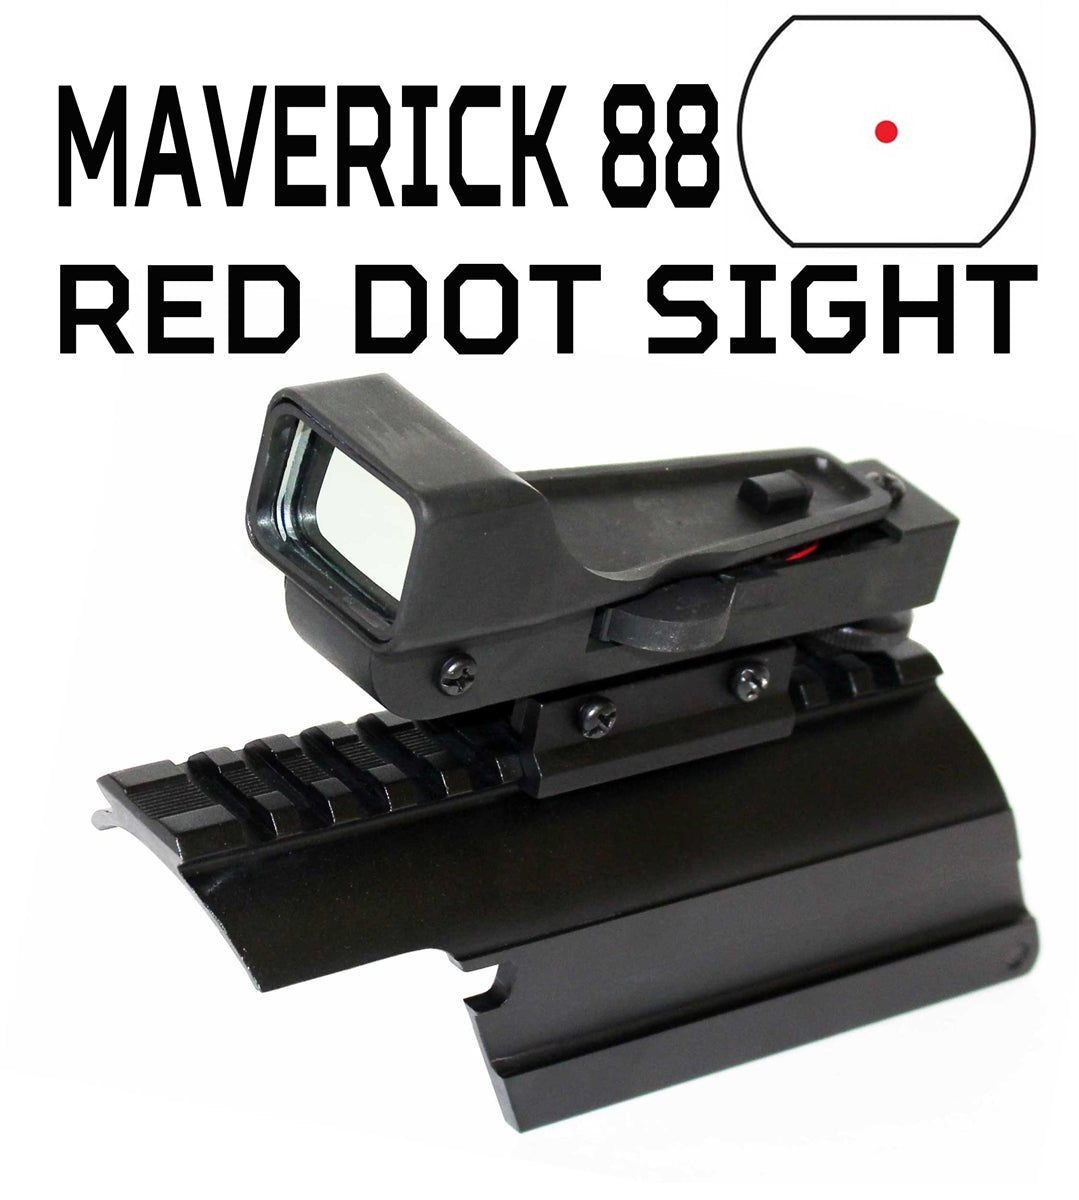 Trinity Saddle Picatinny mount Adapter With Red Dot Reflex Sight For Mossberg Maverick 88 12 Gauge Pump. - TRINITY SUPPLY INC